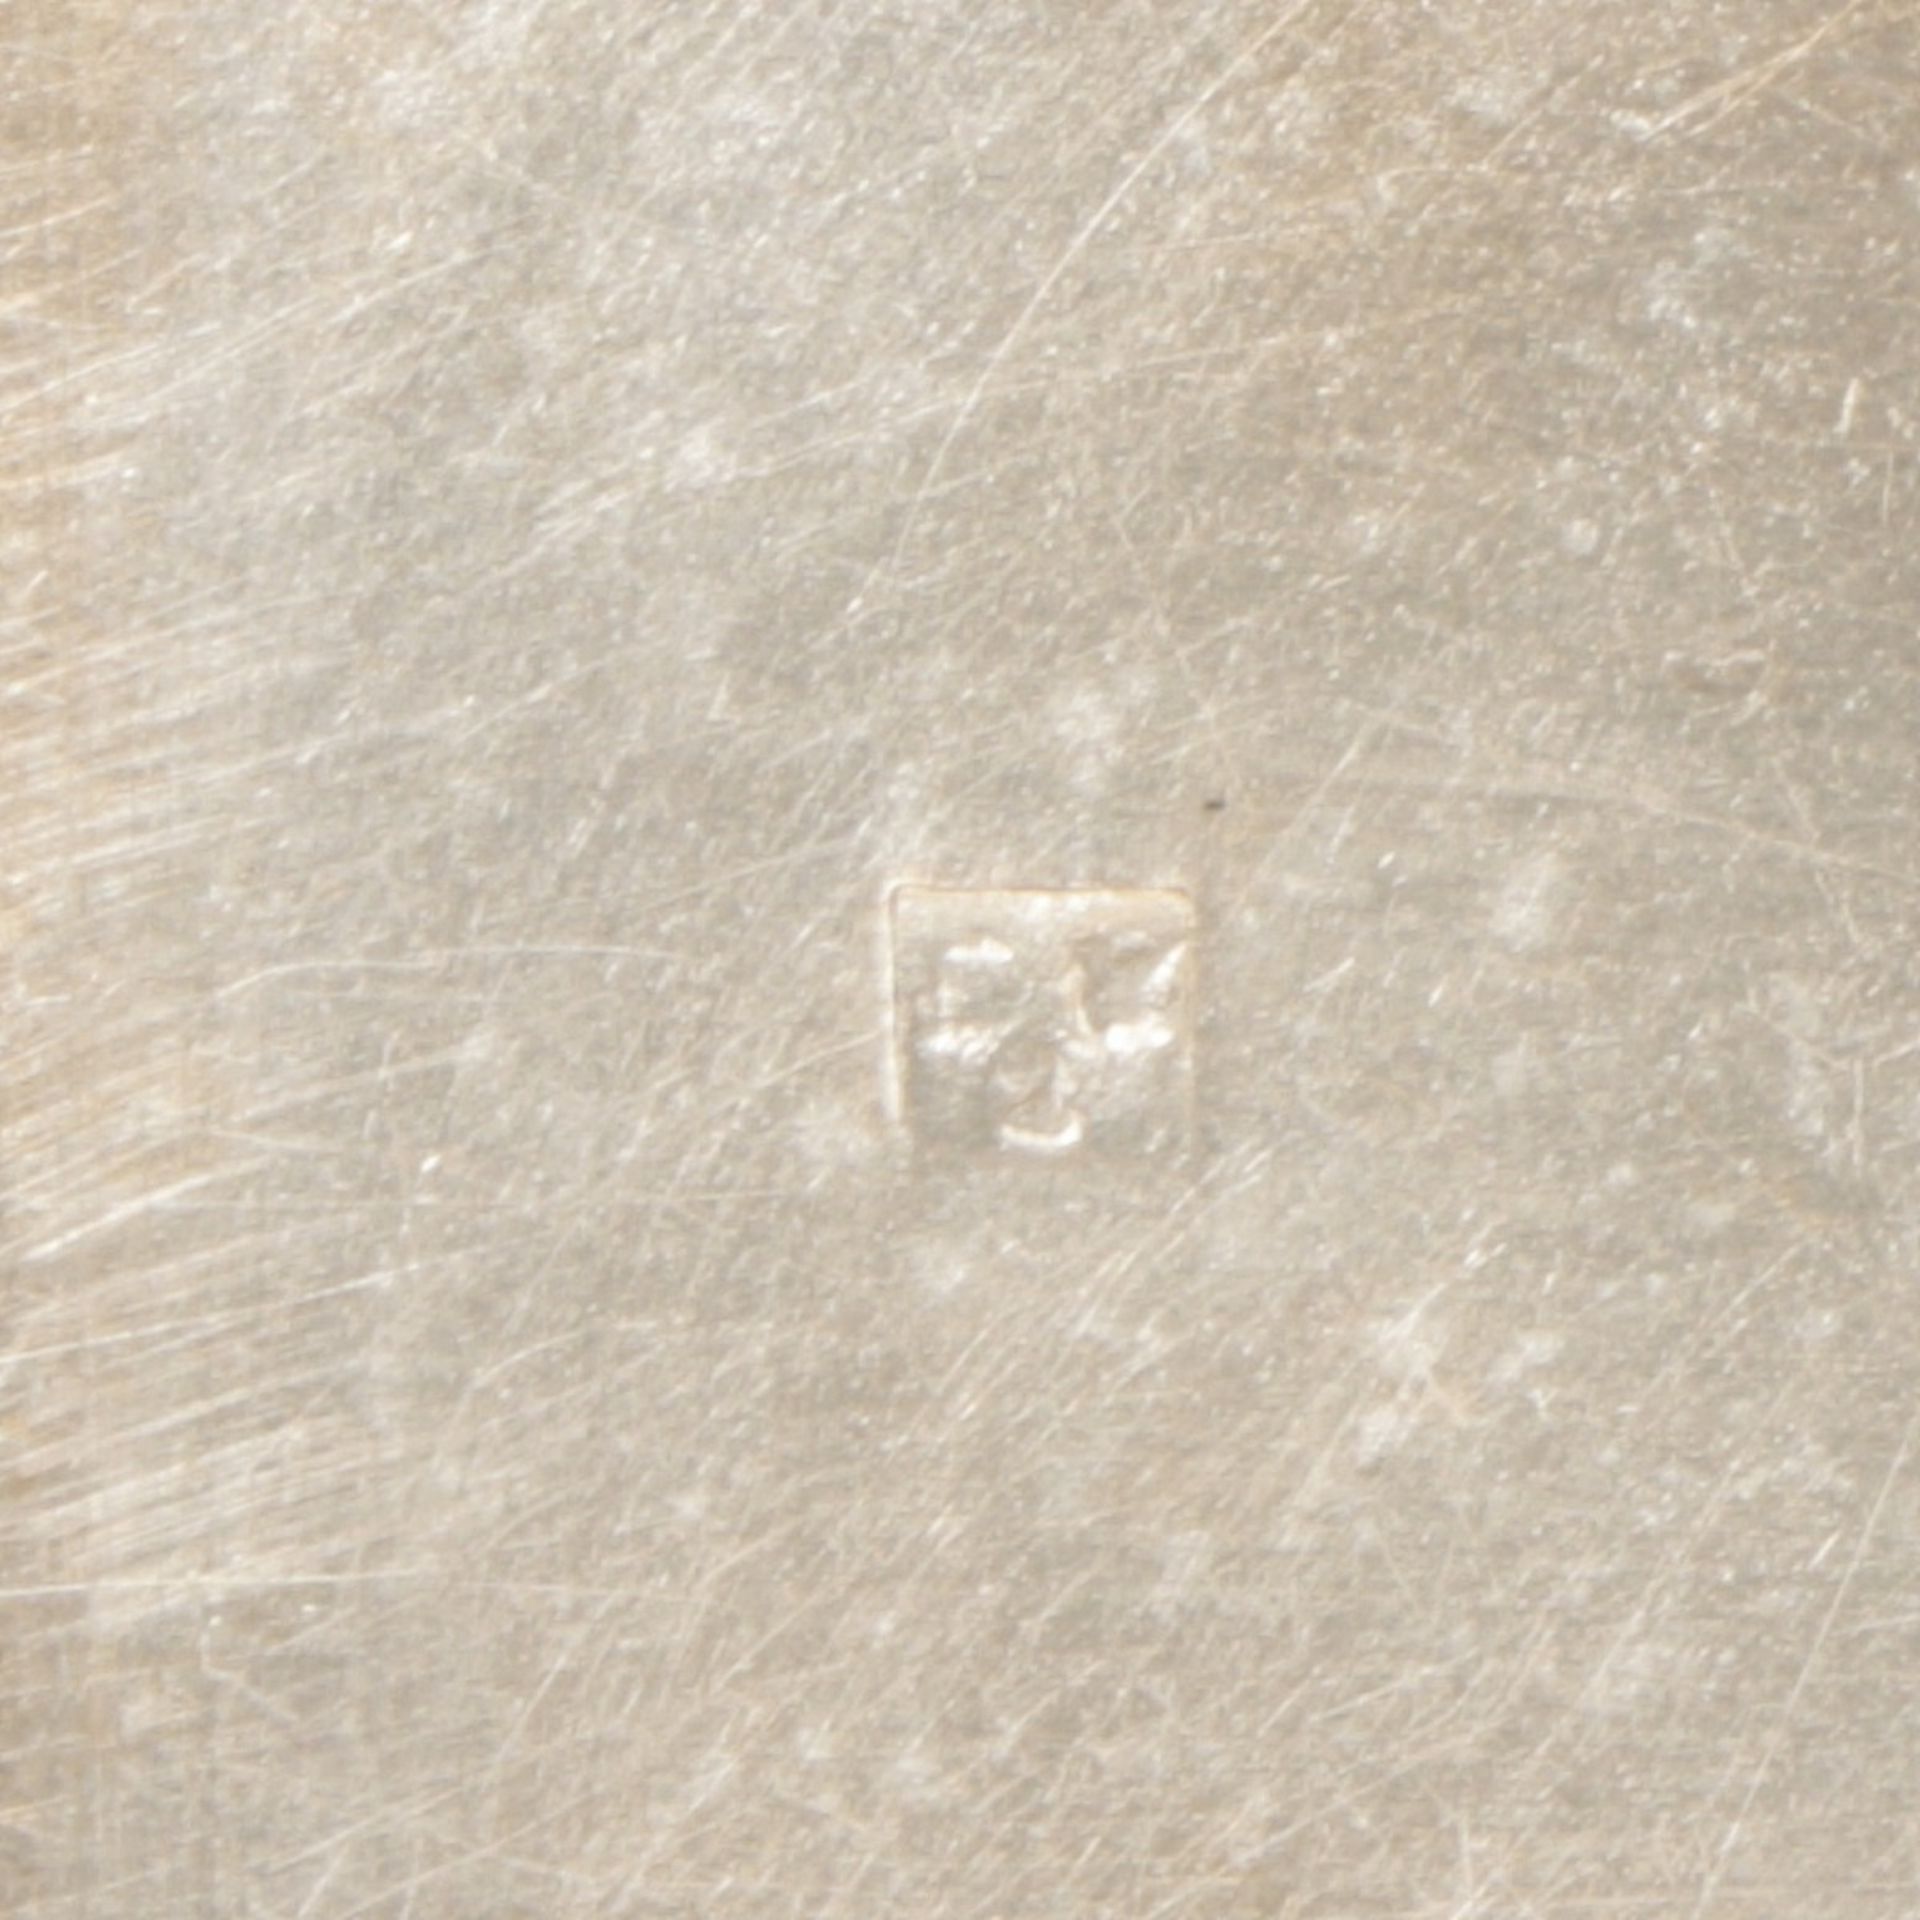 Teaspoon box silver. - Image 8 of 9